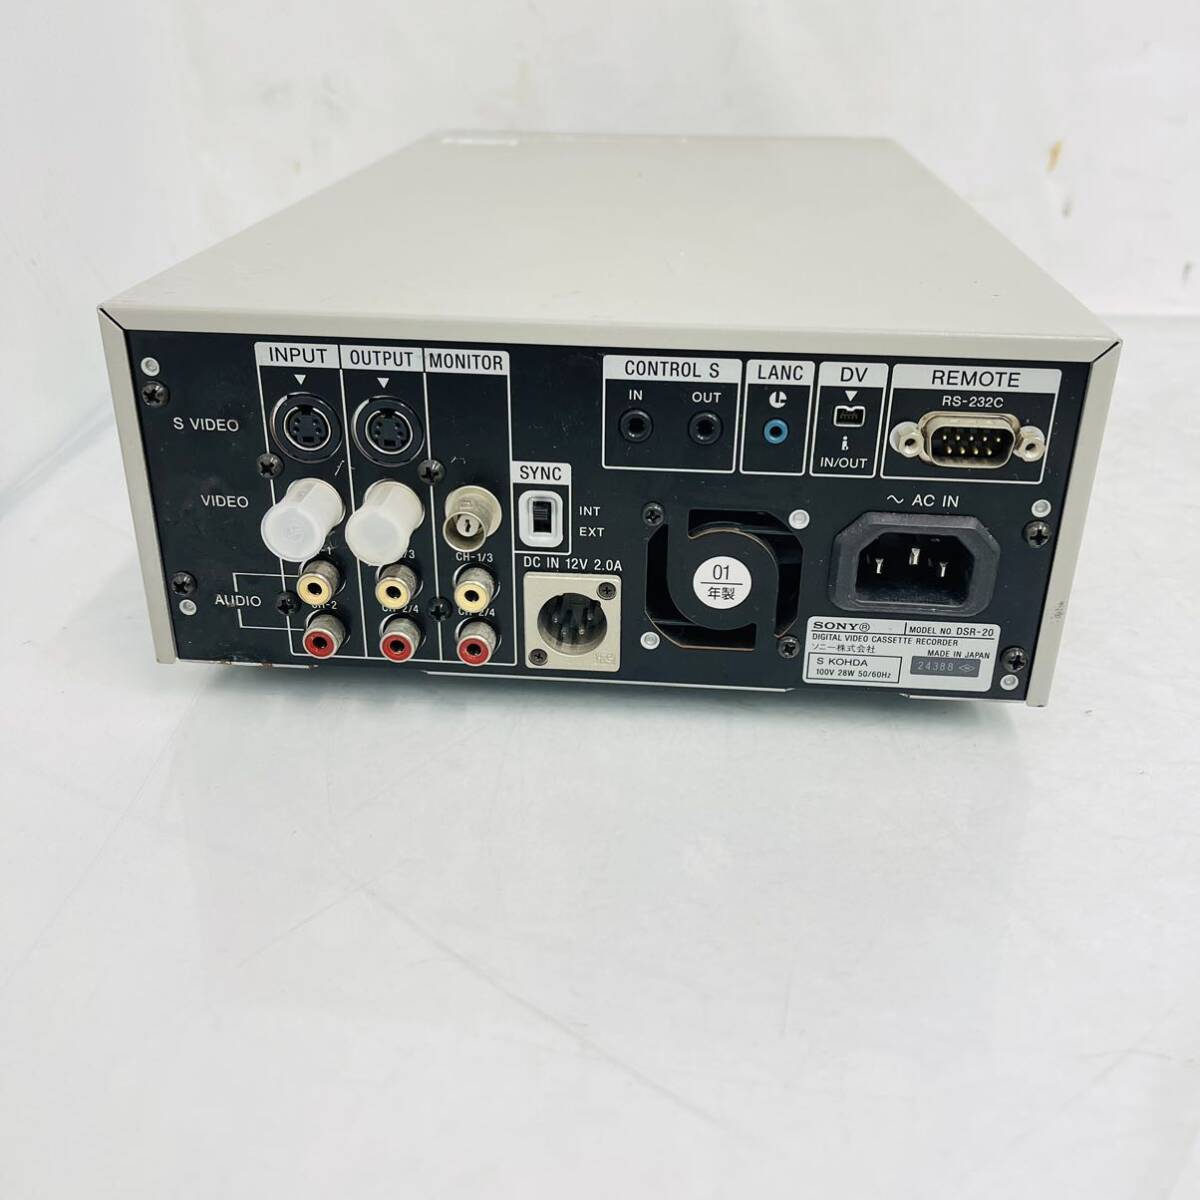 4SC006 SONY ソニー DVCAM mini DV ビデオカセットレコーダー DSR-20 業務用 家電 映像機器 ビデオデッキ 電源コード付き 中古 現状品 